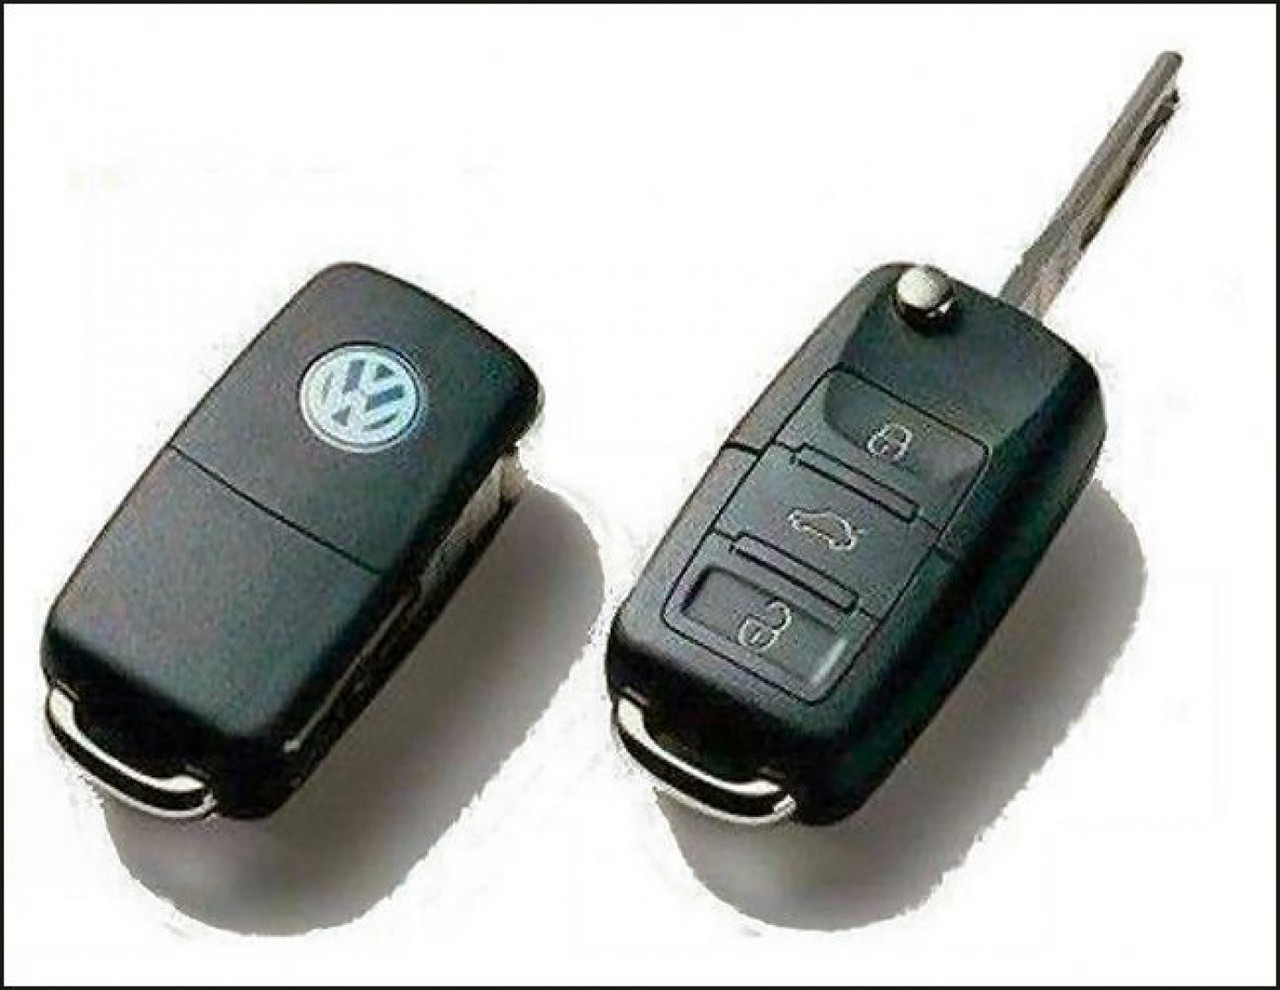 14mm Black Blue VW Car Key Fob Remote Badge Logo Emblem Sticker